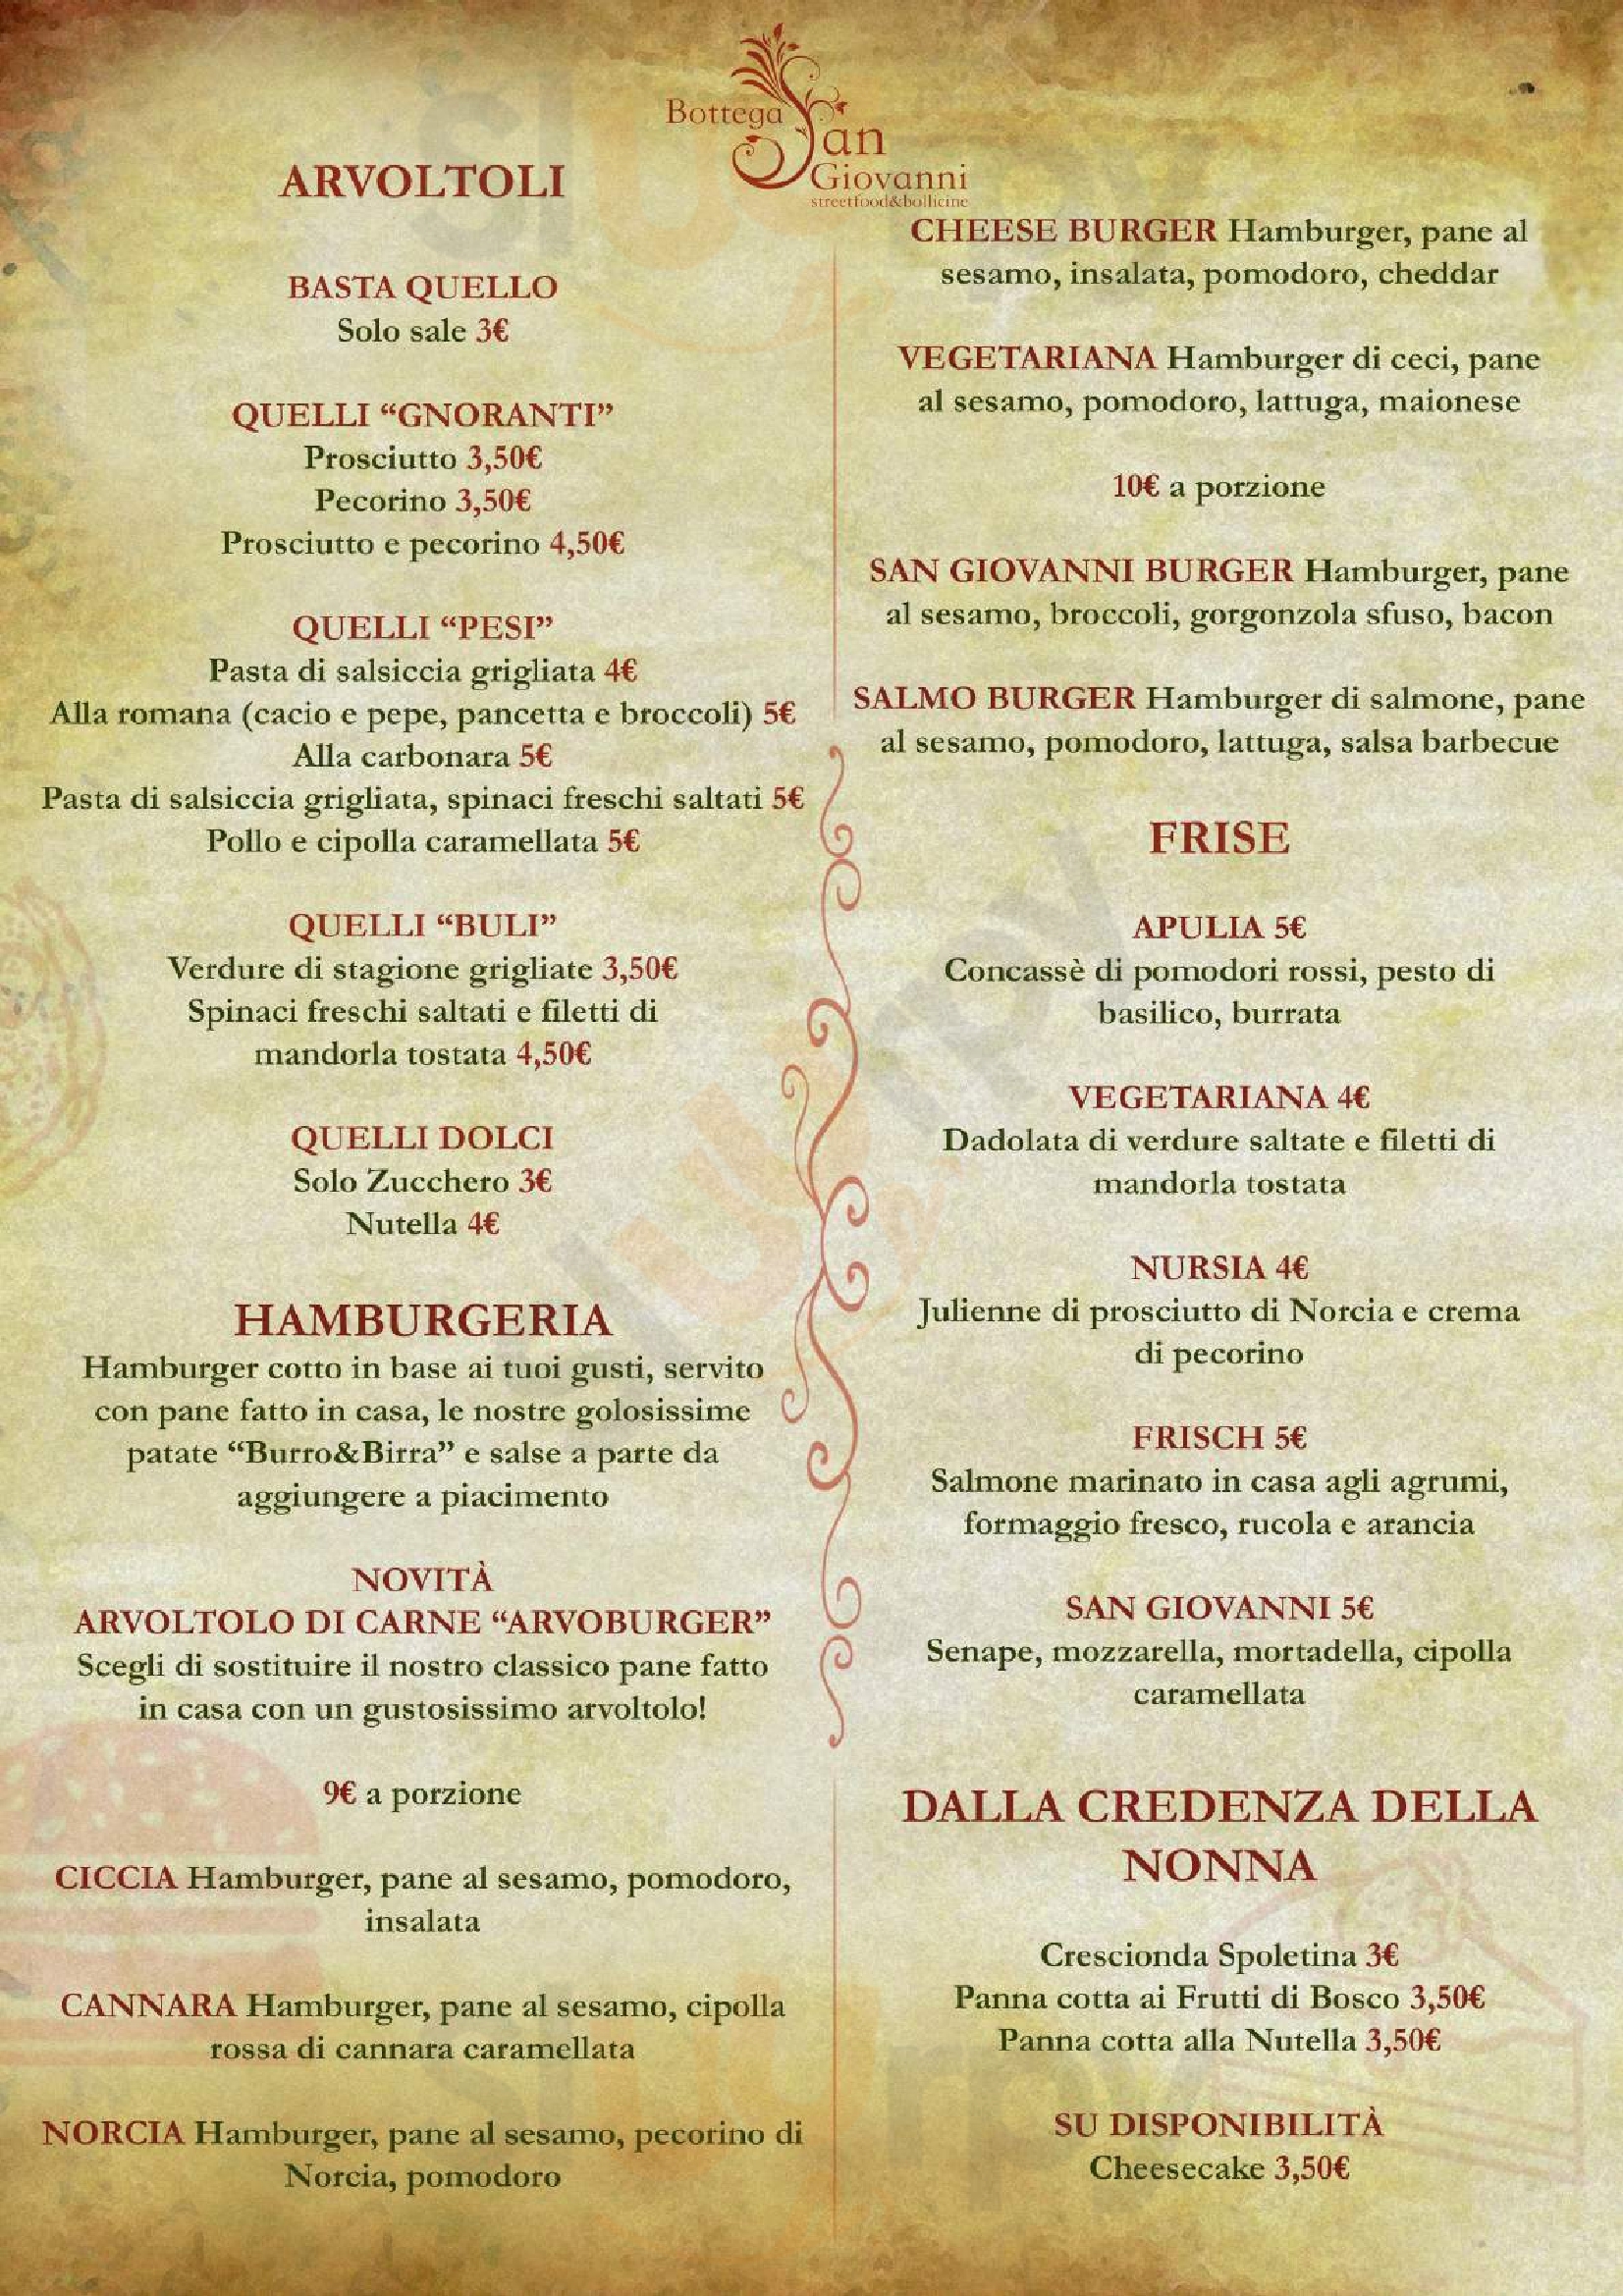 Bottega San Giovanni Perugia menù 1 pagina